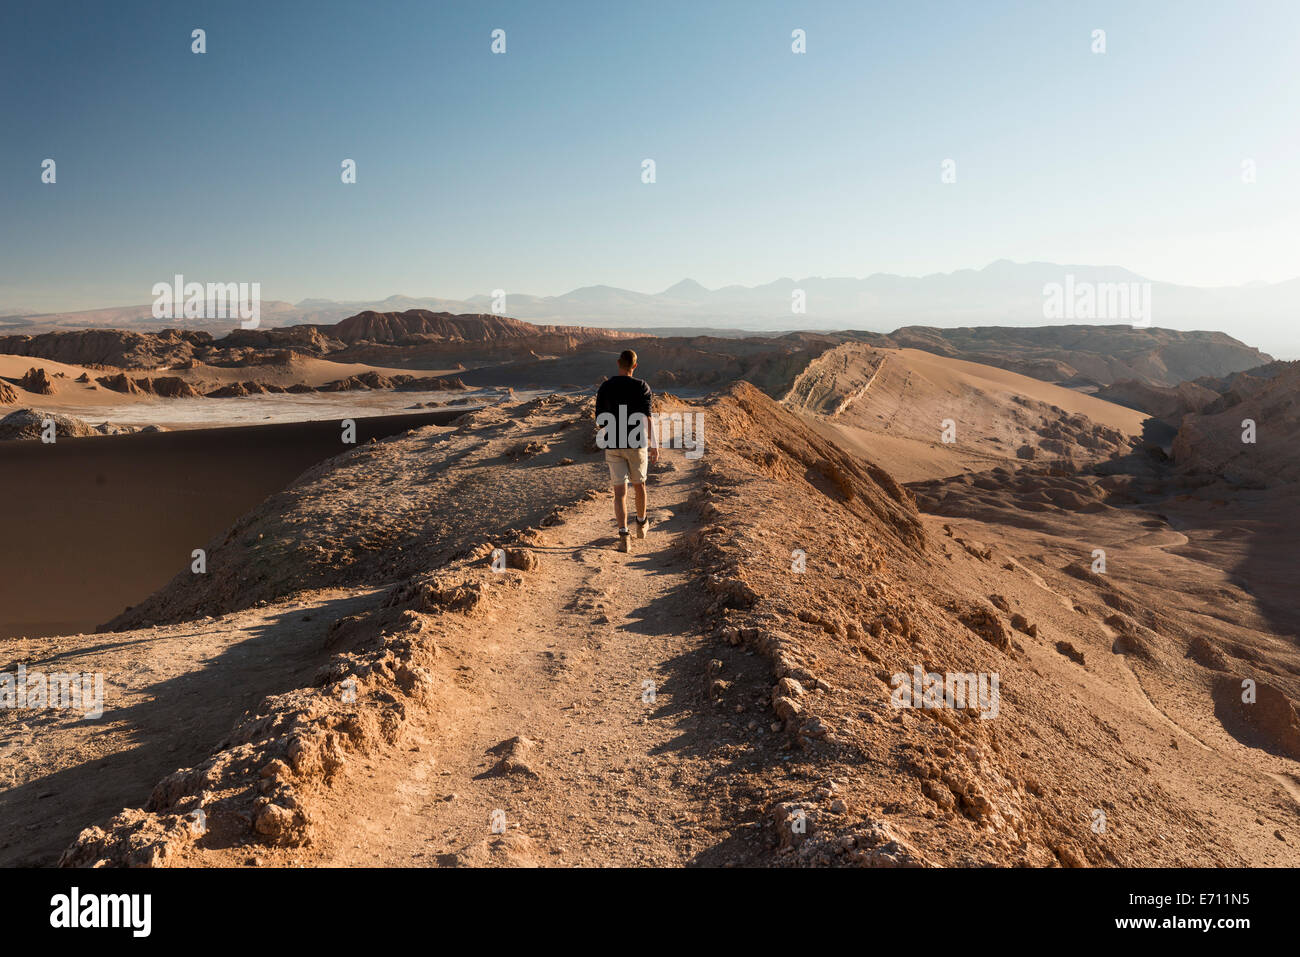 Menschen wandern, Sanddüne (Duna Bürgermeister), Chile, El Norte Grande, Valle De La Luna (Tal des Mondes), Atacama-Wüste Stockfoto